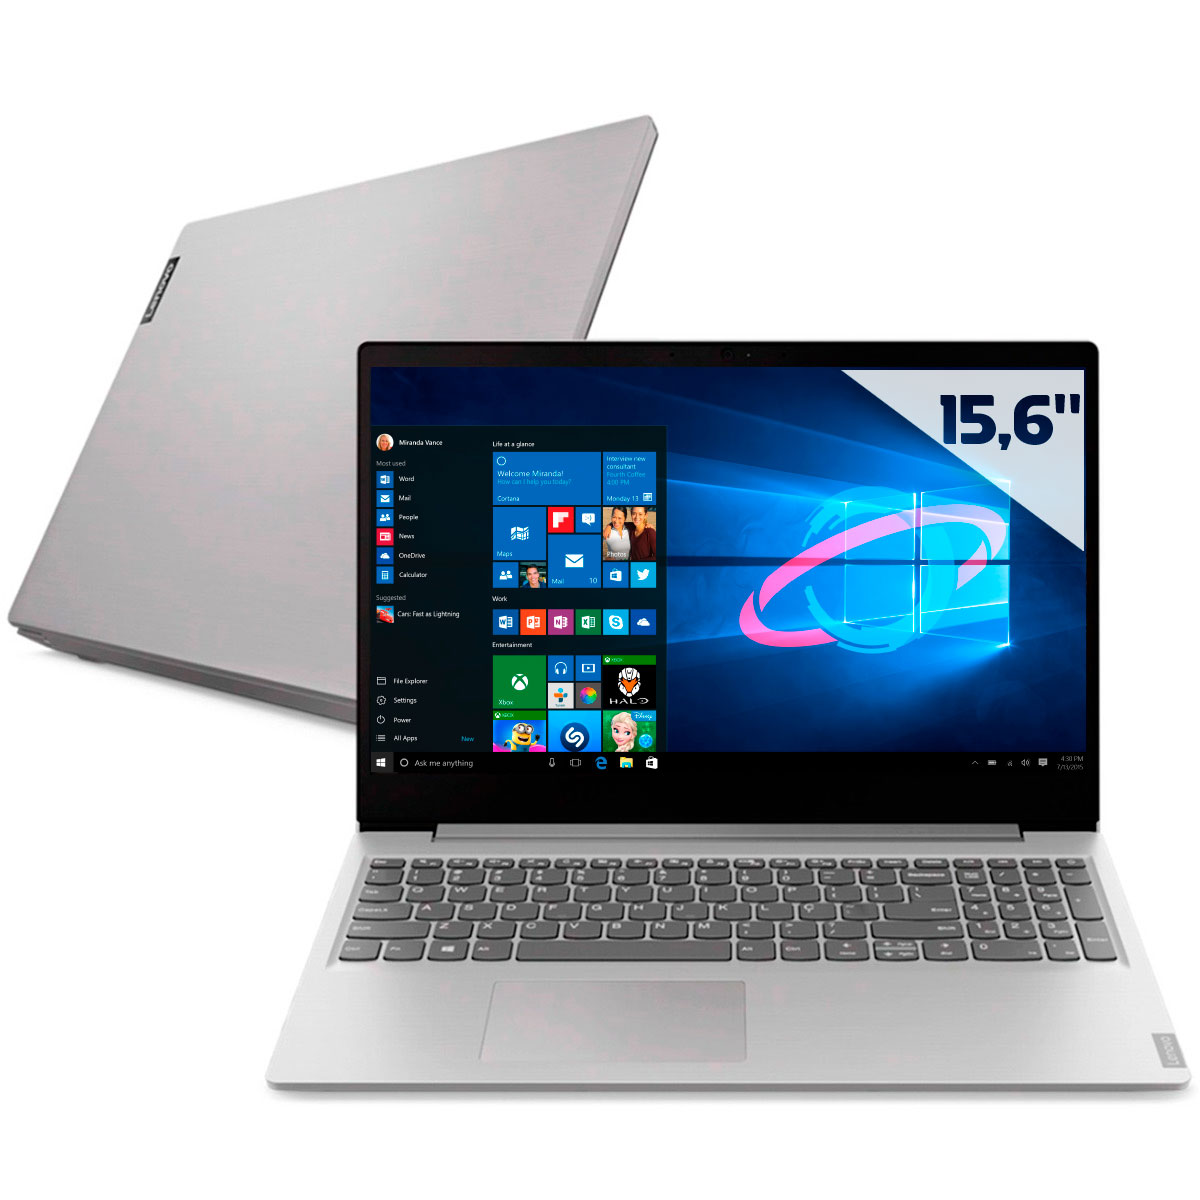 Notebook Lenovo Ideapad S145 - Intel i7 1065G7, 20GB, SSD 256GB, Tela 15.6